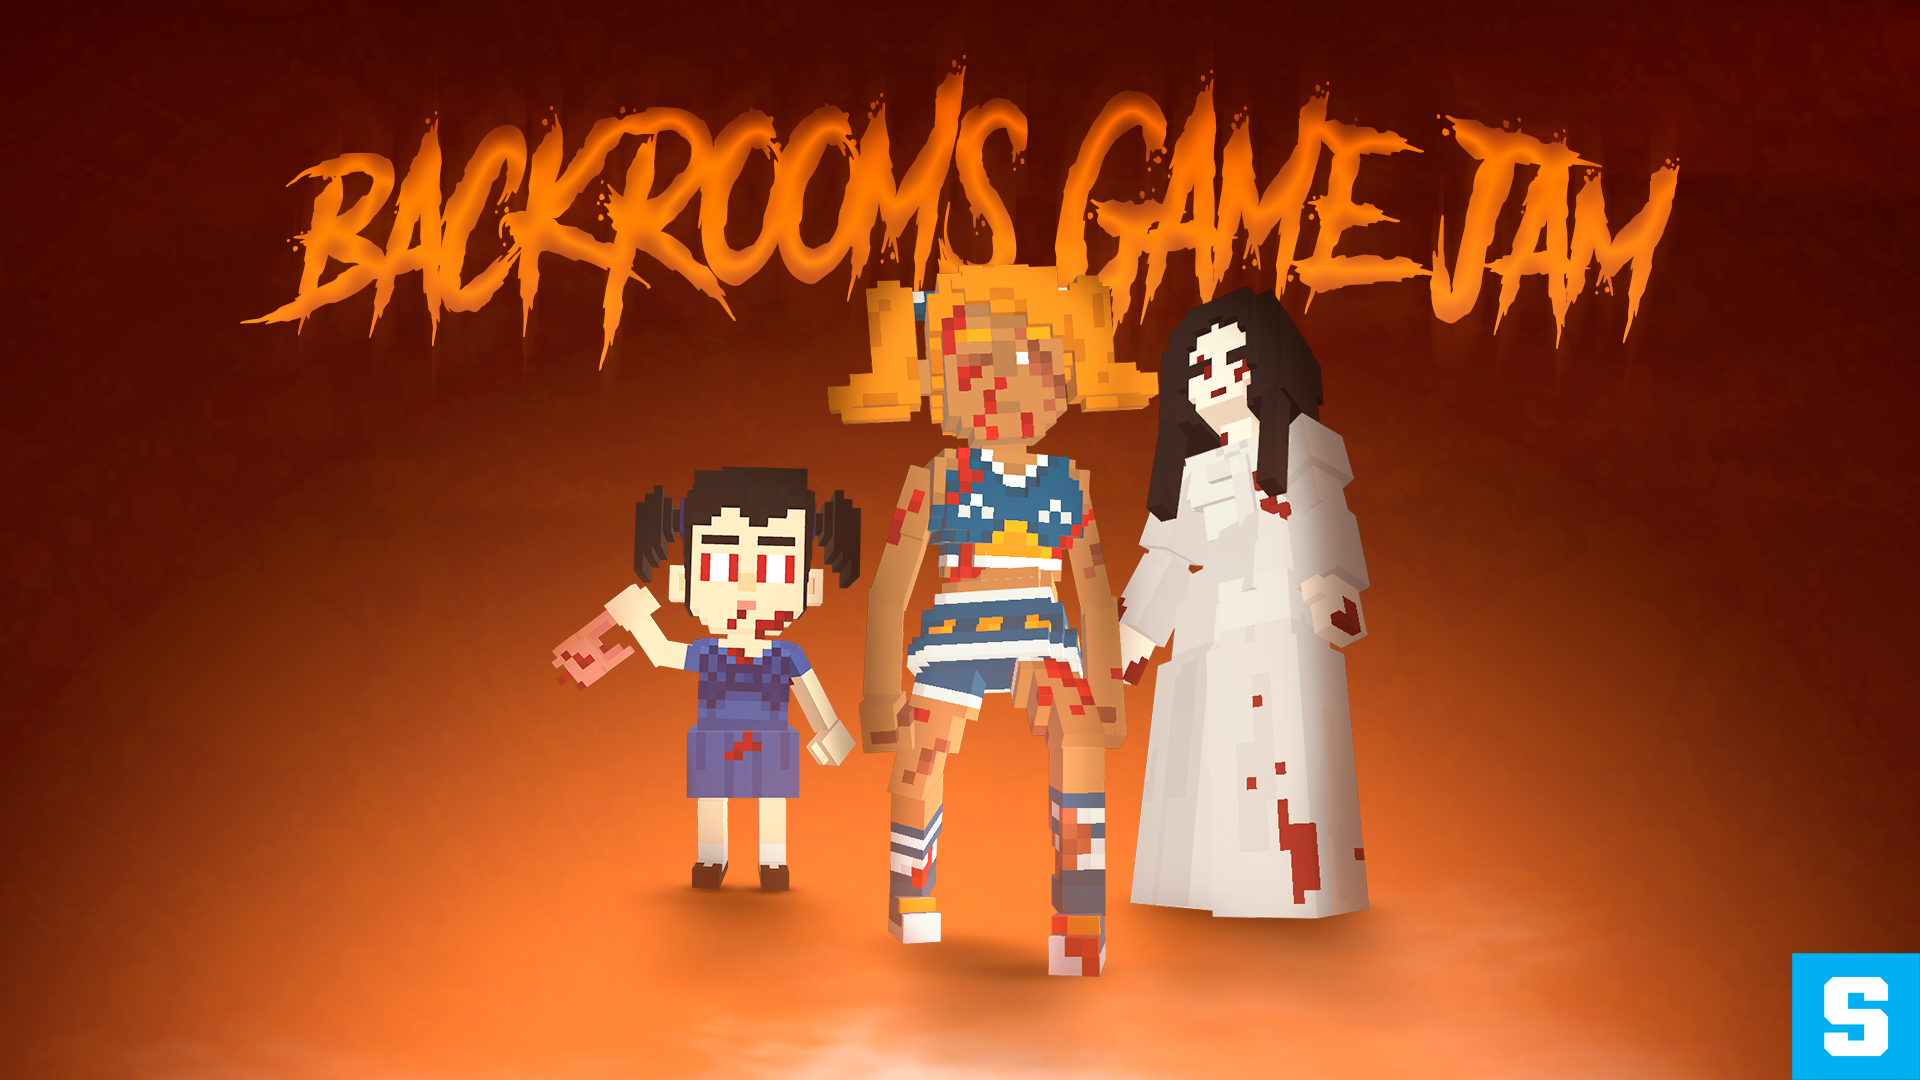 Backrooms Game Icon Feedback - Creations Feedback - Developer Forum